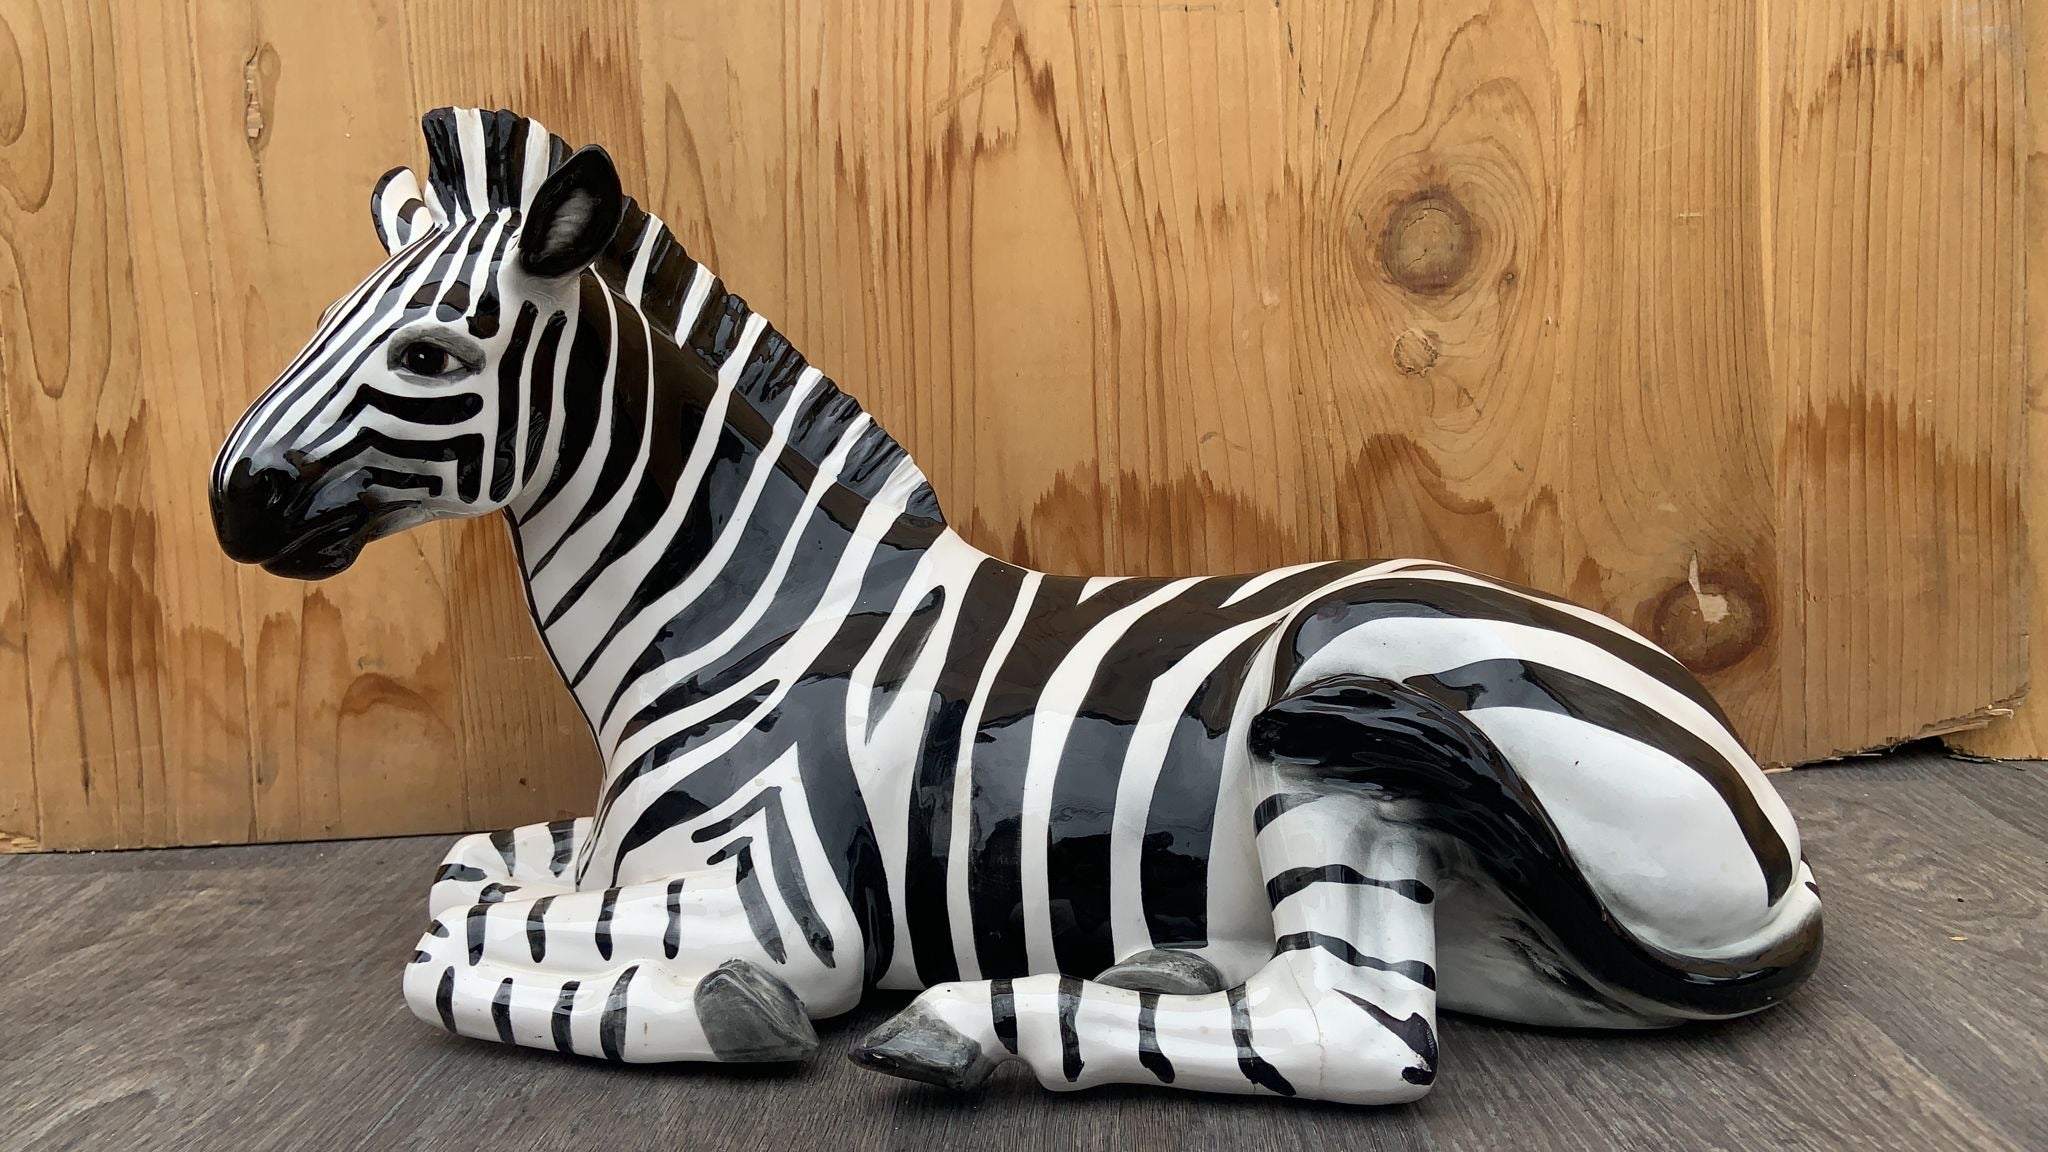 Mid Century Modern Ceramic Zebra Statue Sculpture Figurine